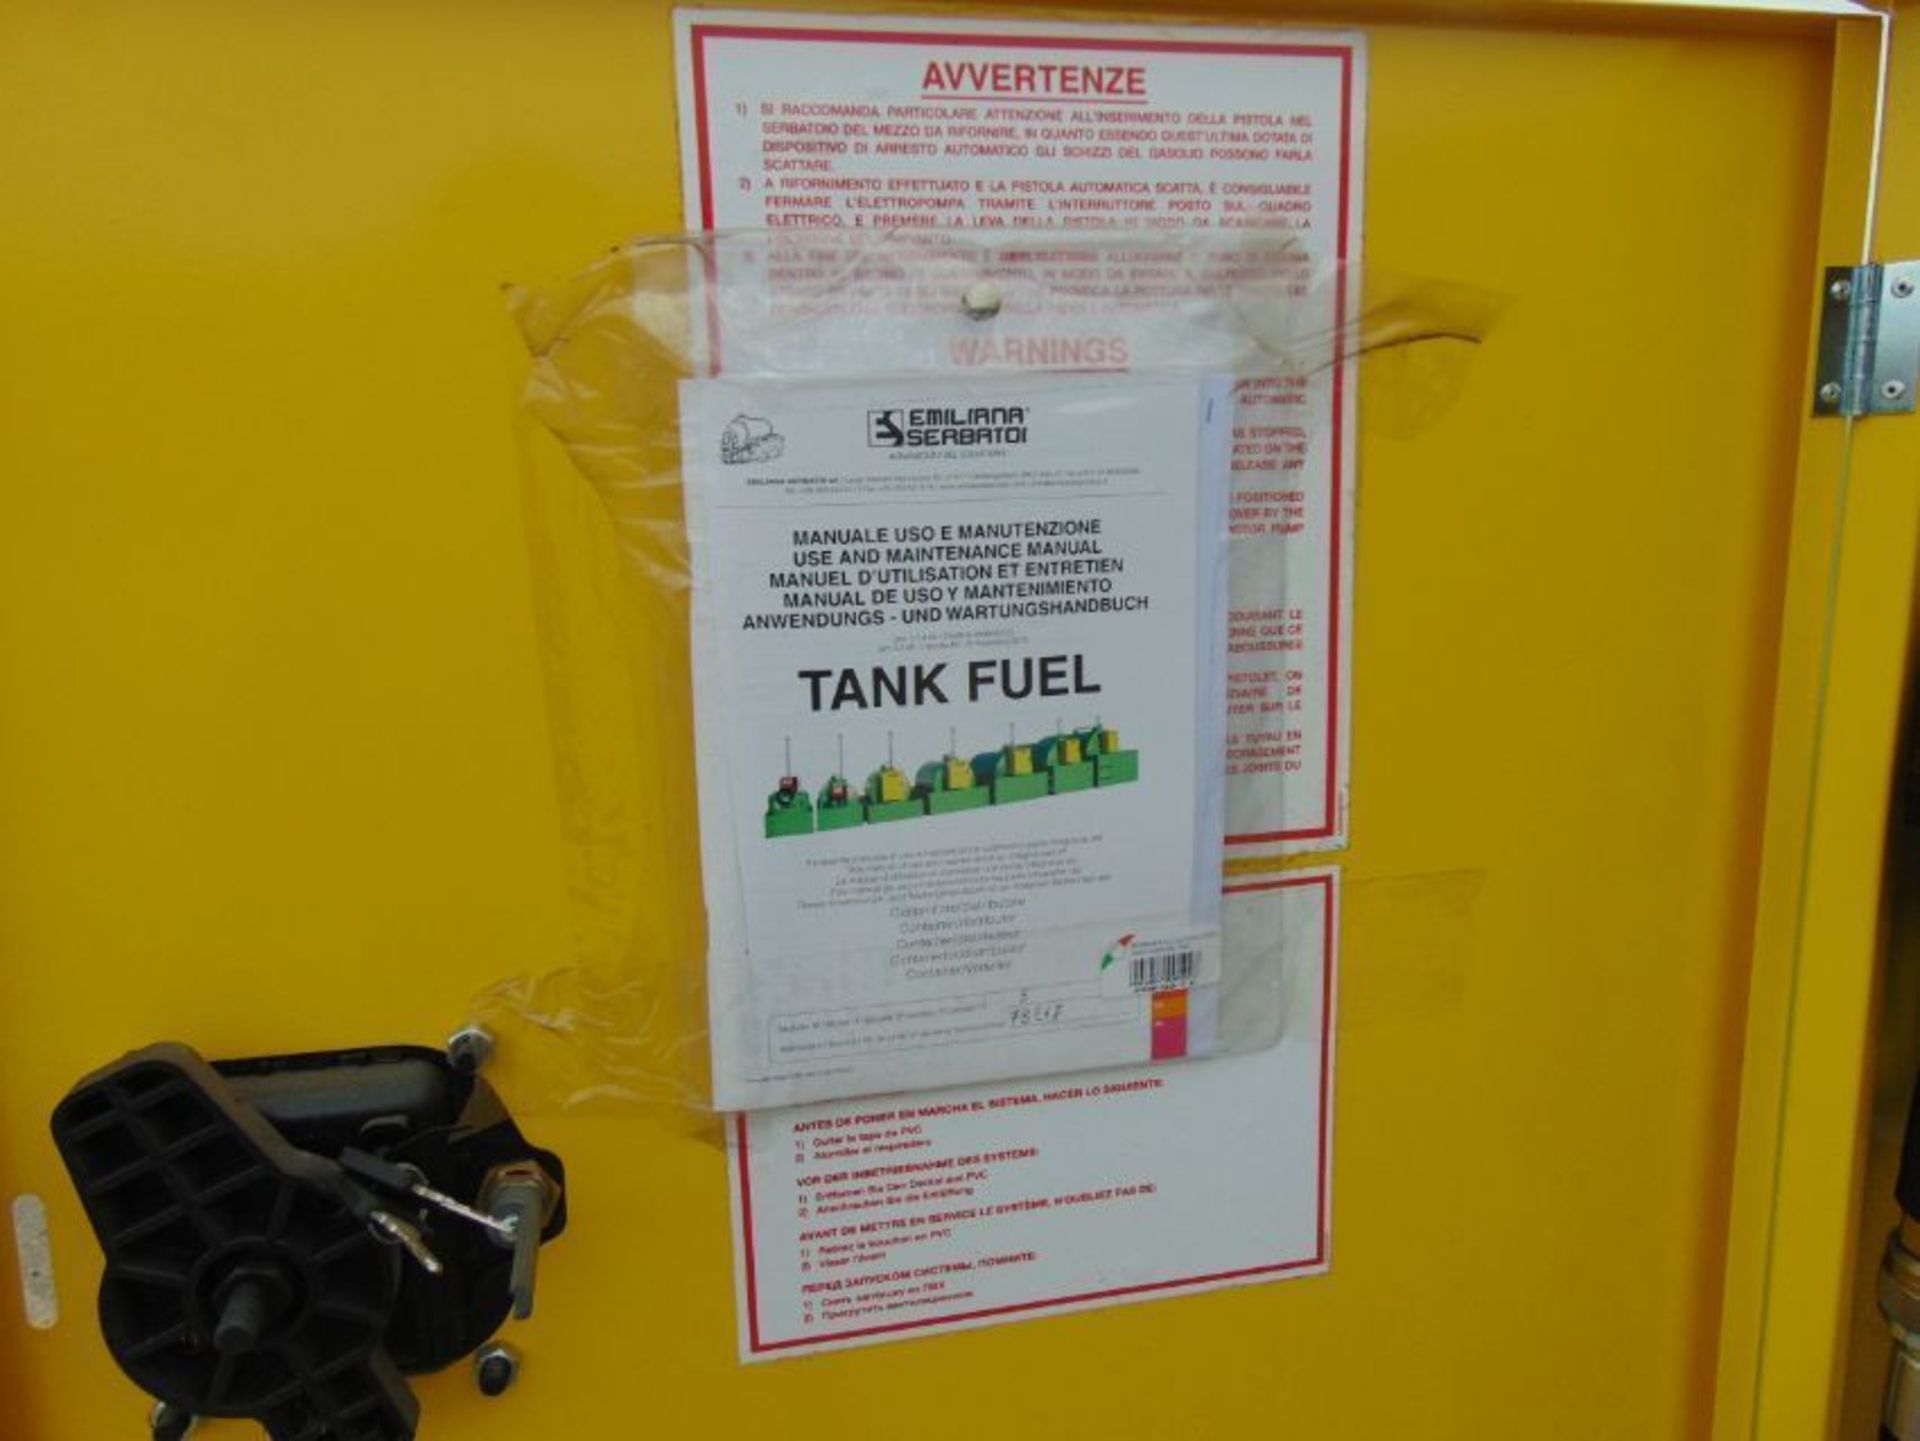 NEW UNUSED Emiliana Serbatoi 2022 TF3/50 3172 litre Diesel Fuel Tank - Image 10 of 11